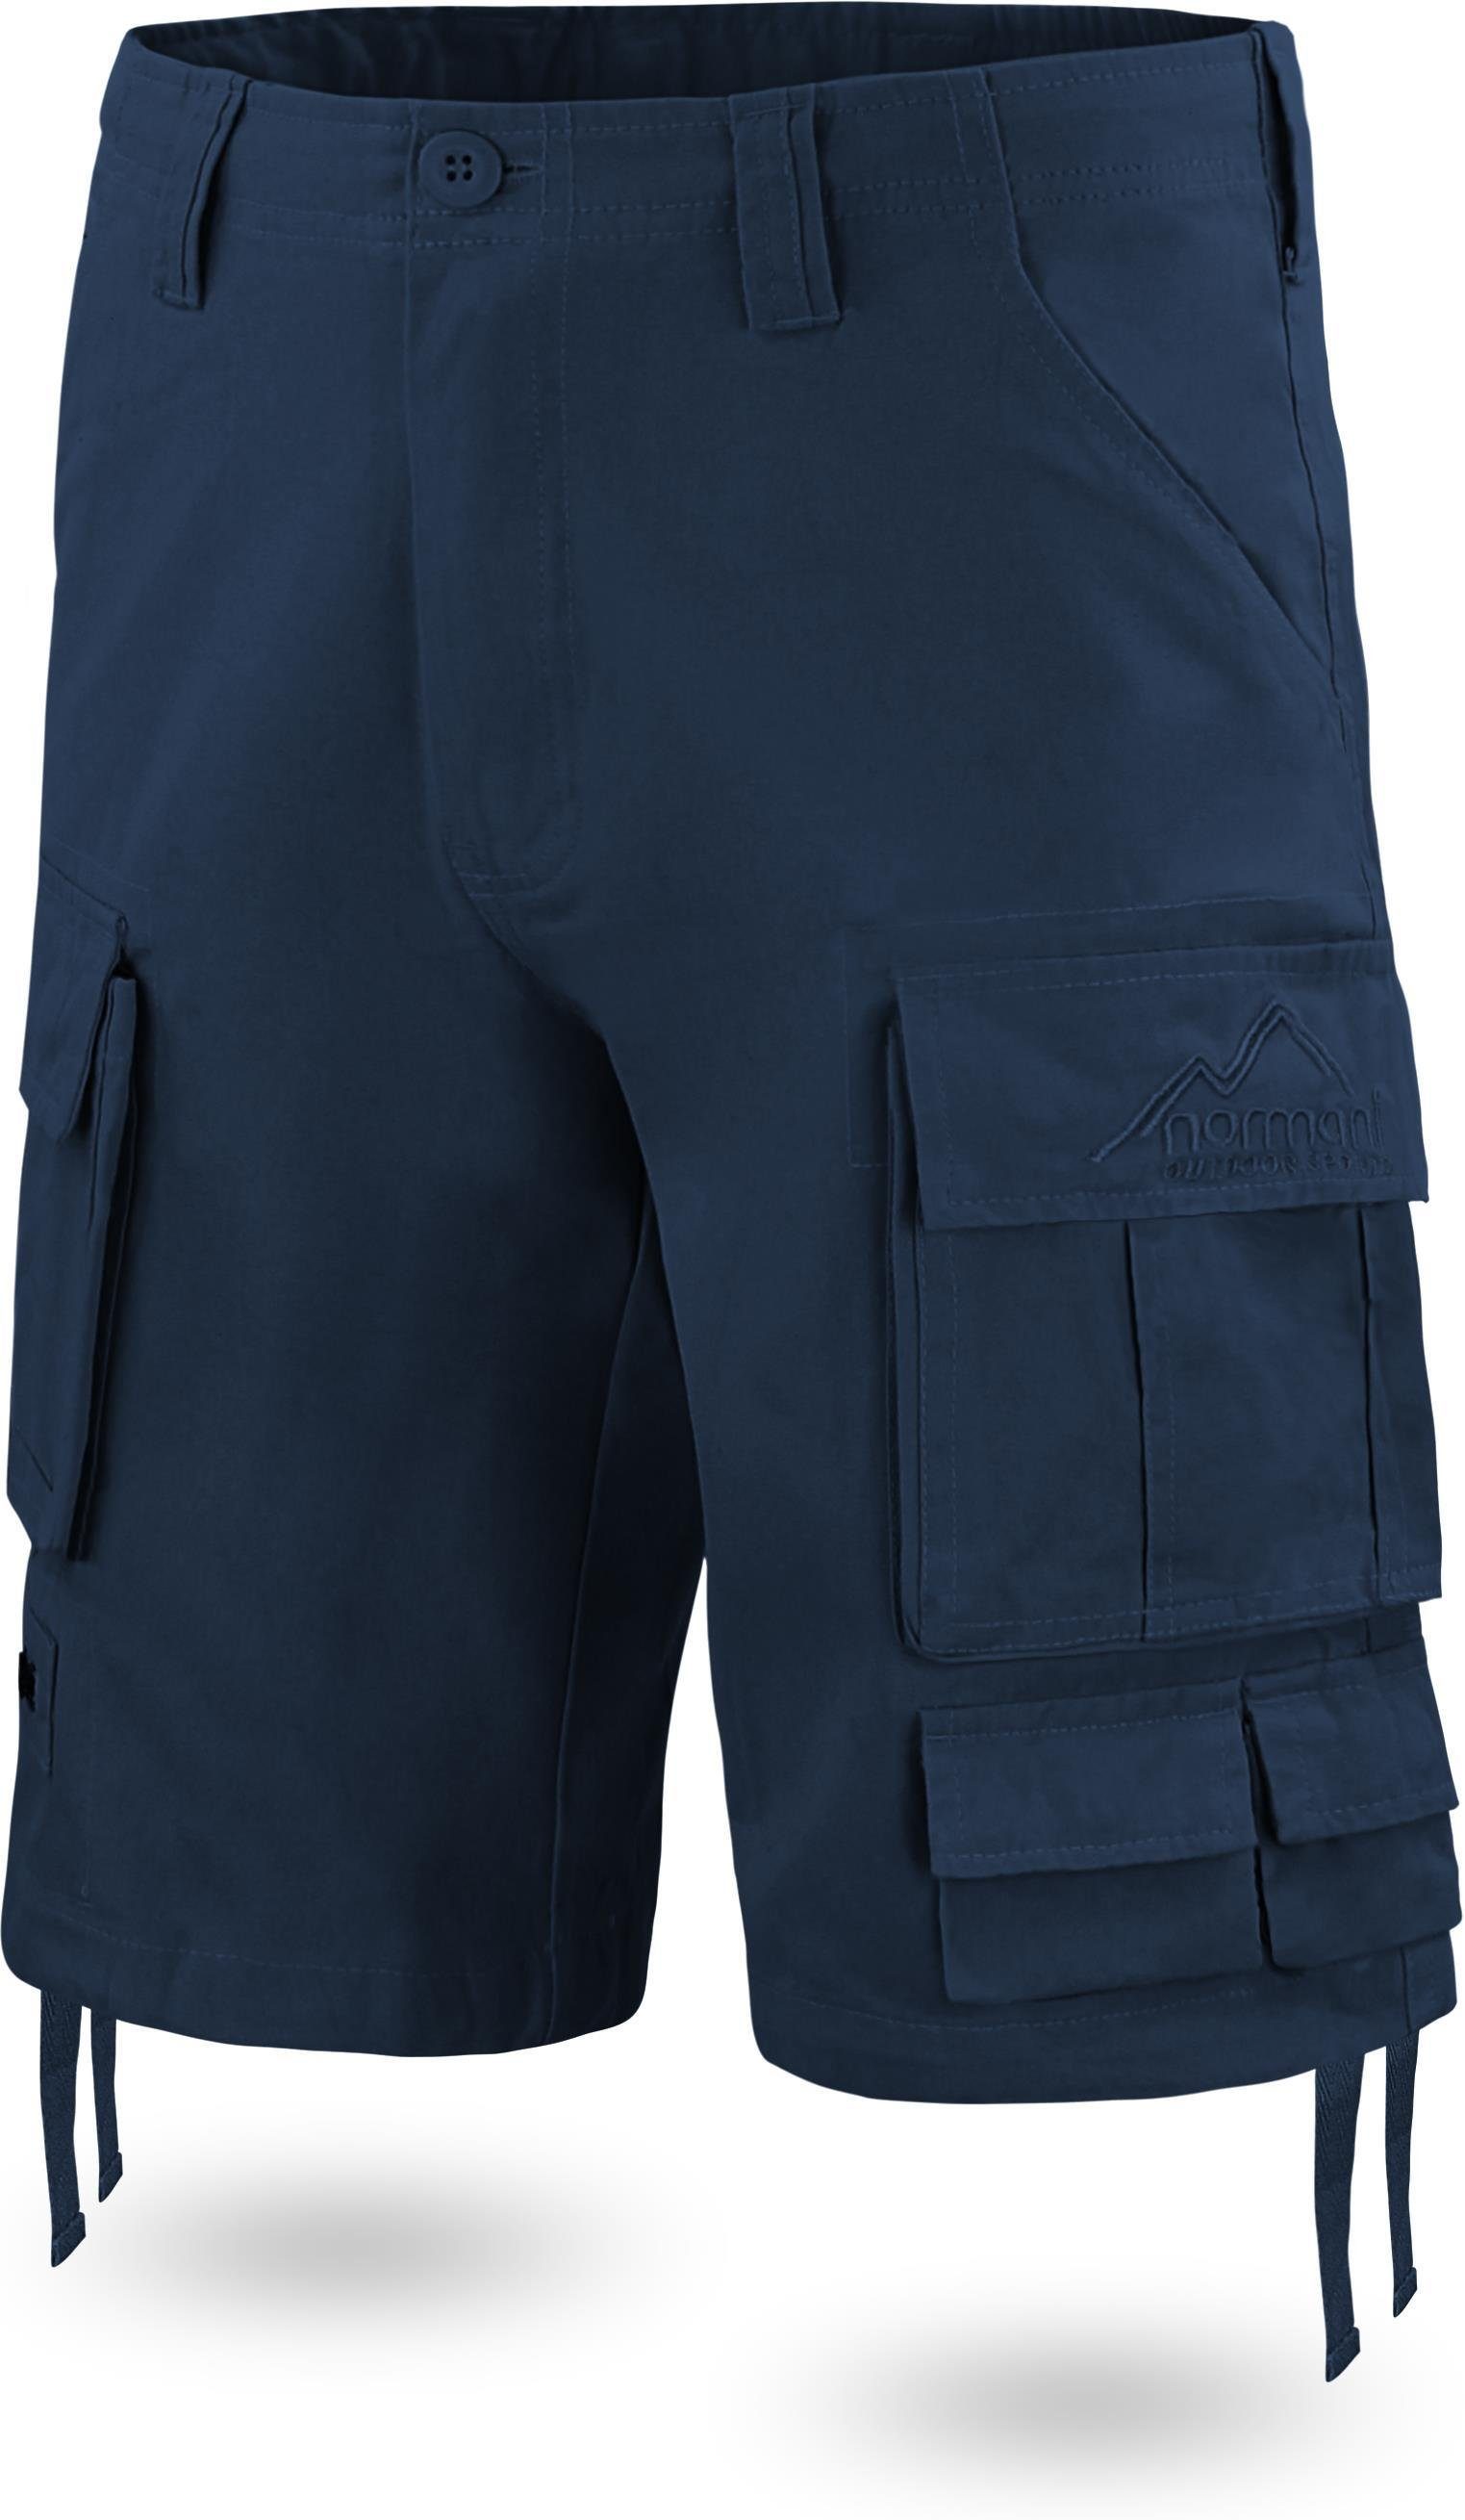 normani Bermudas aus Atacama Navy Vintage Sommershorts Shorts Bio-Baumwolle kurze Cargoshorts 100% Herren Shorts